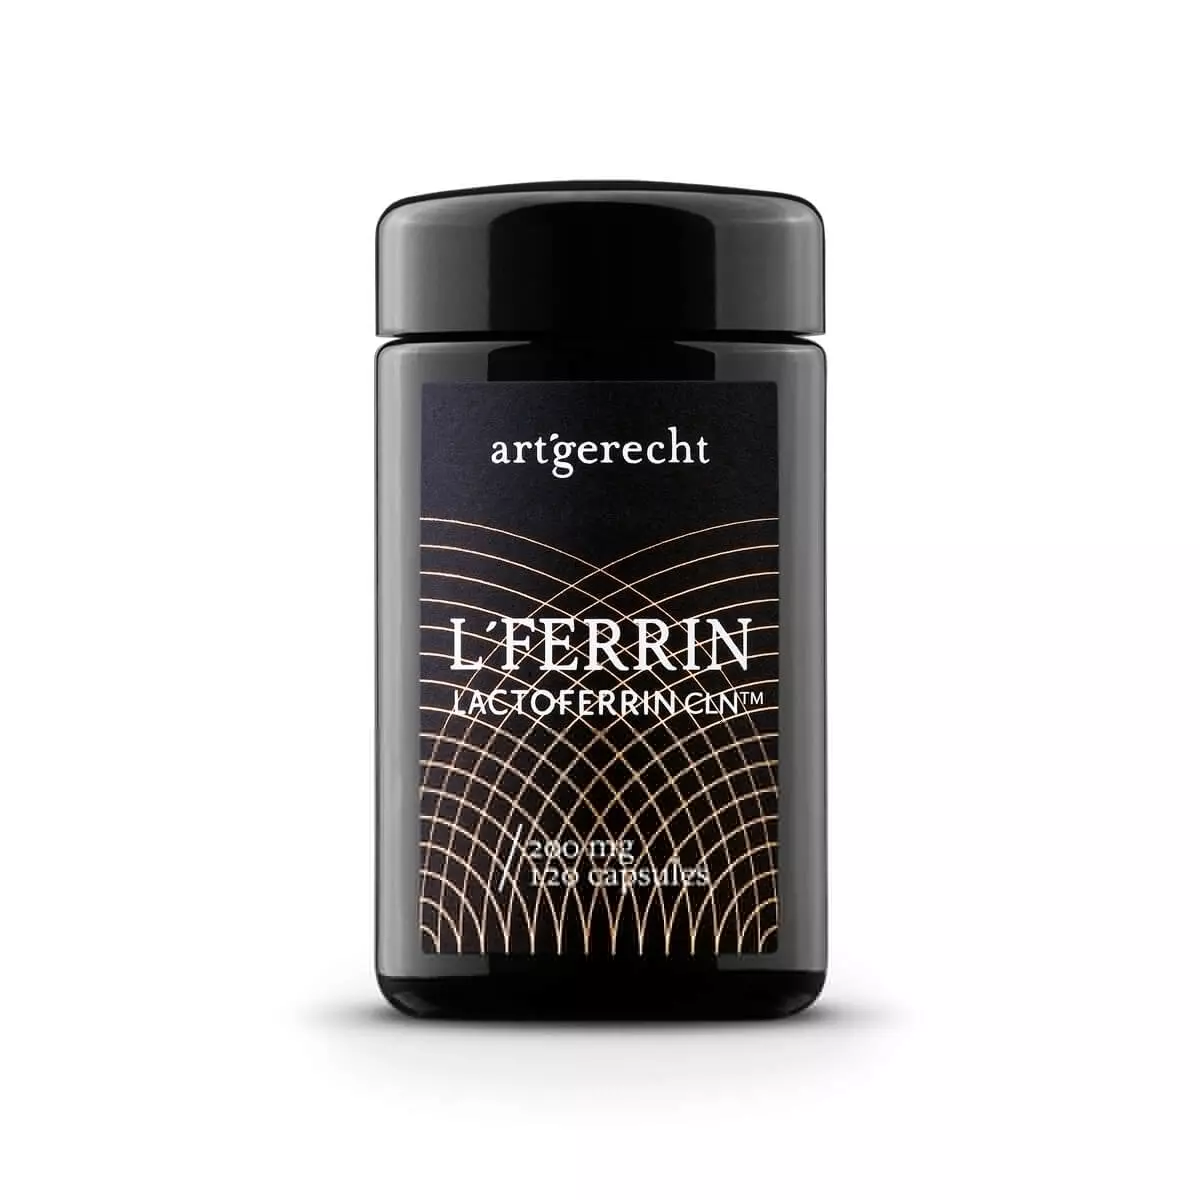 L'FERRIN - Lactoferrina CLN (limpia)